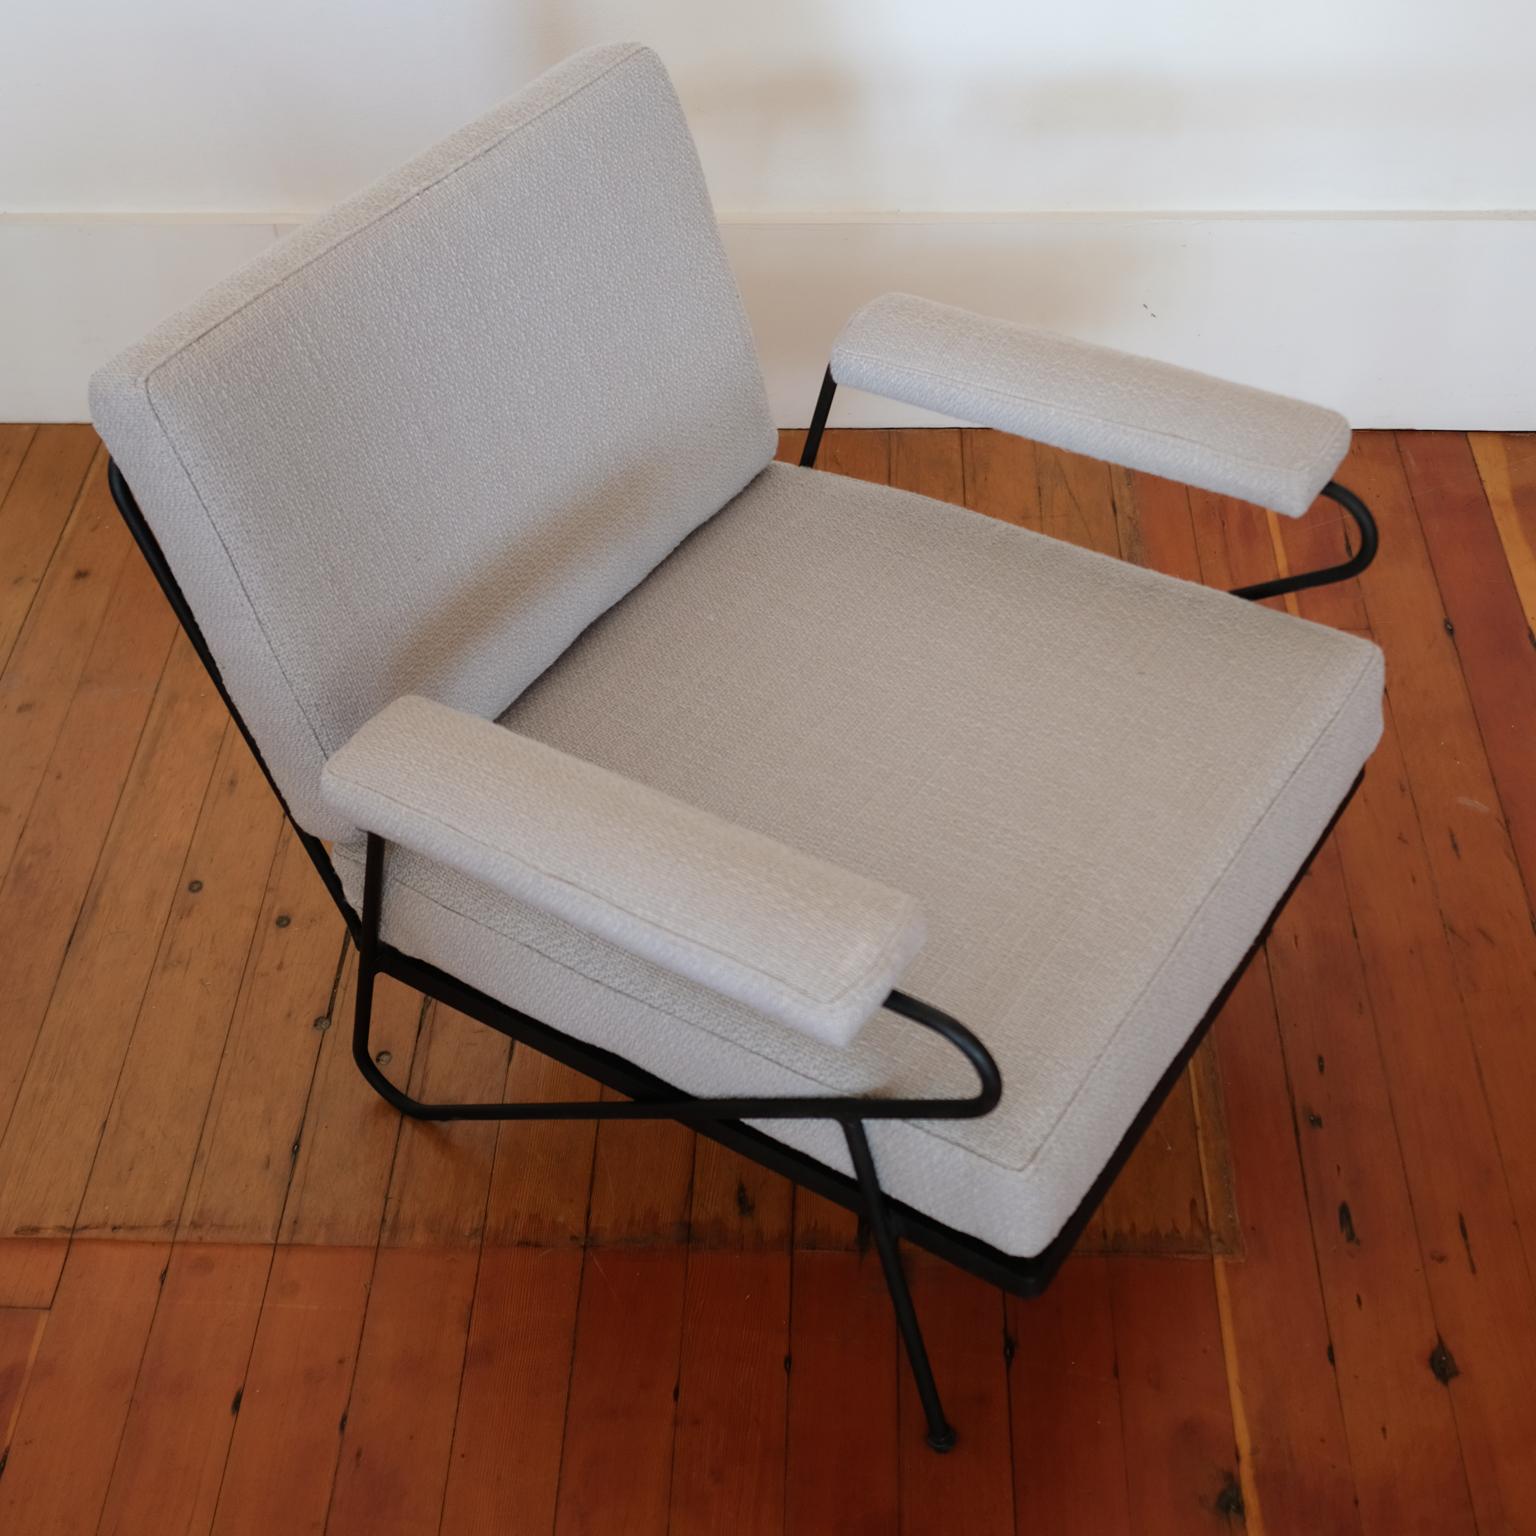 Mid-20th Century Inco Iron Lounge Chair Midcentury California Design, 1950s